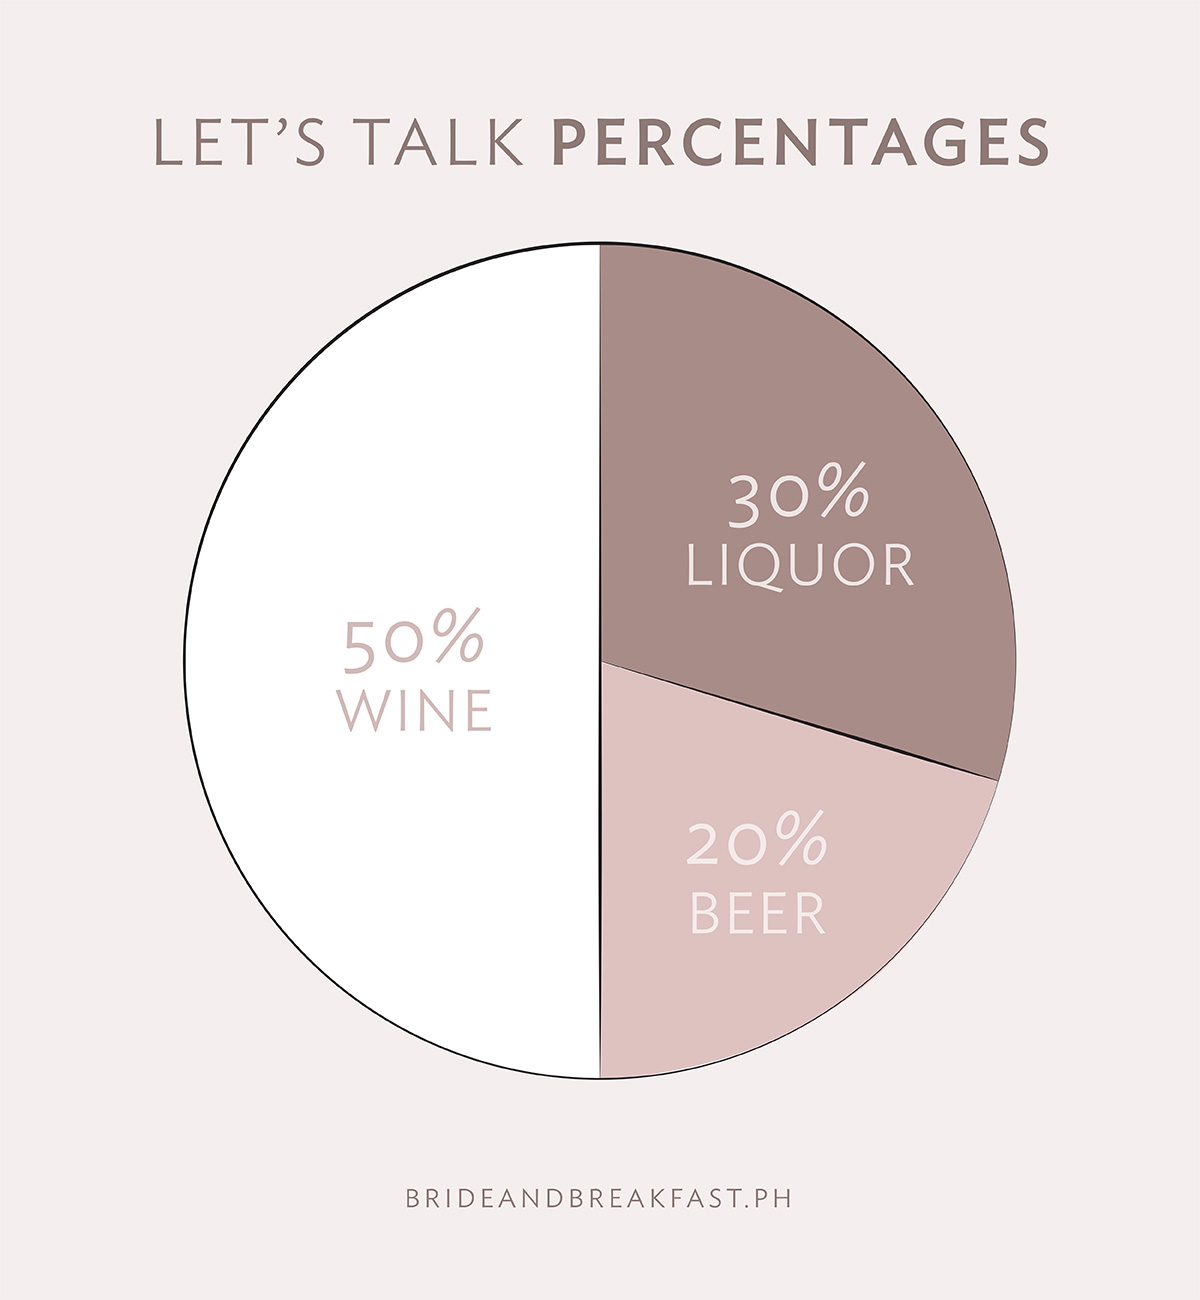 Let's talk percentages